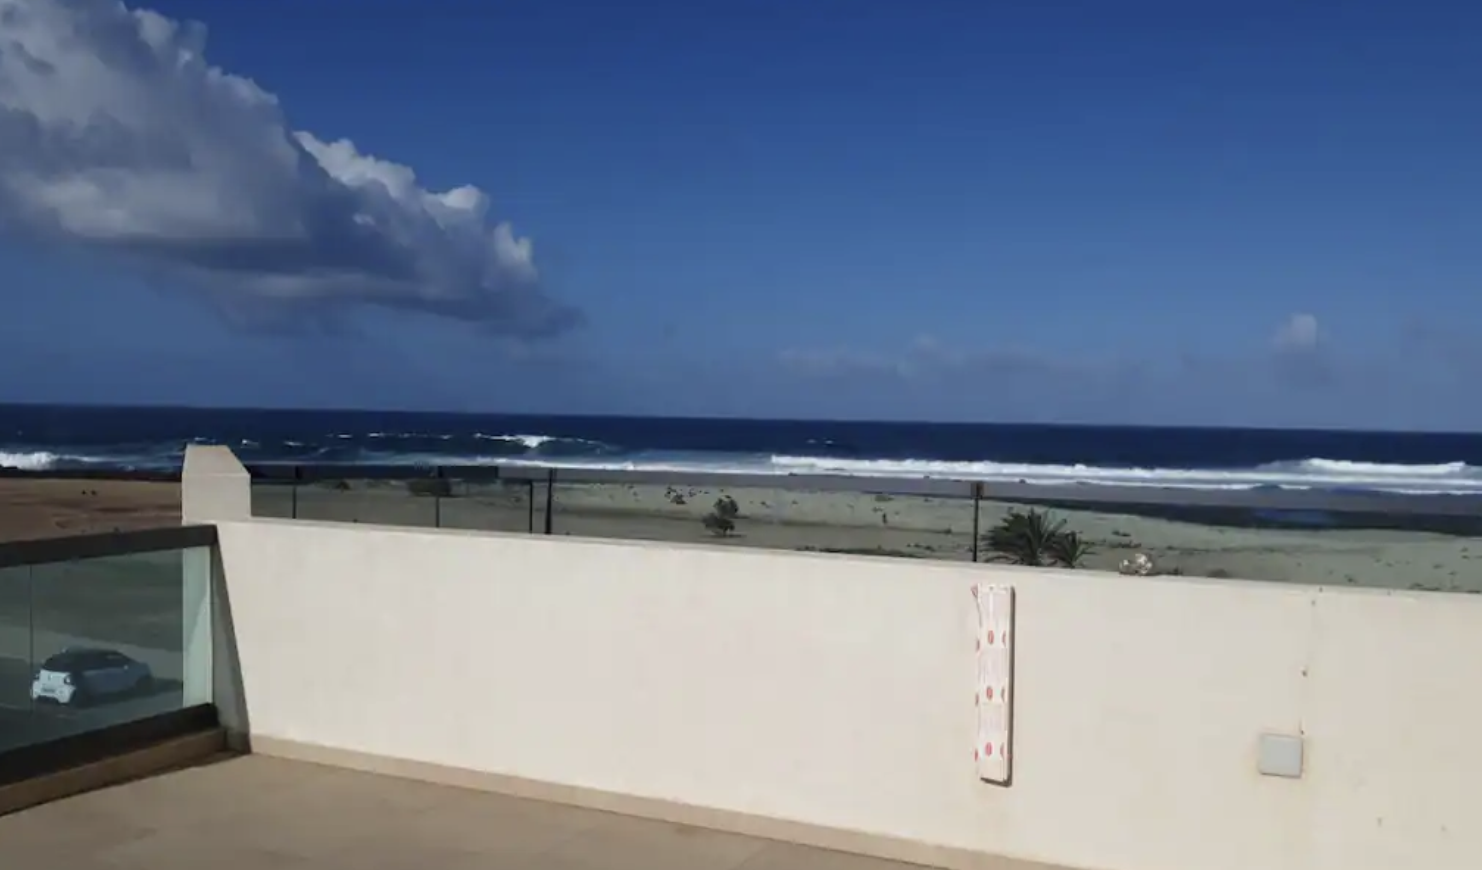 Imagen casa surf house para alojamiento en Fuerteventura